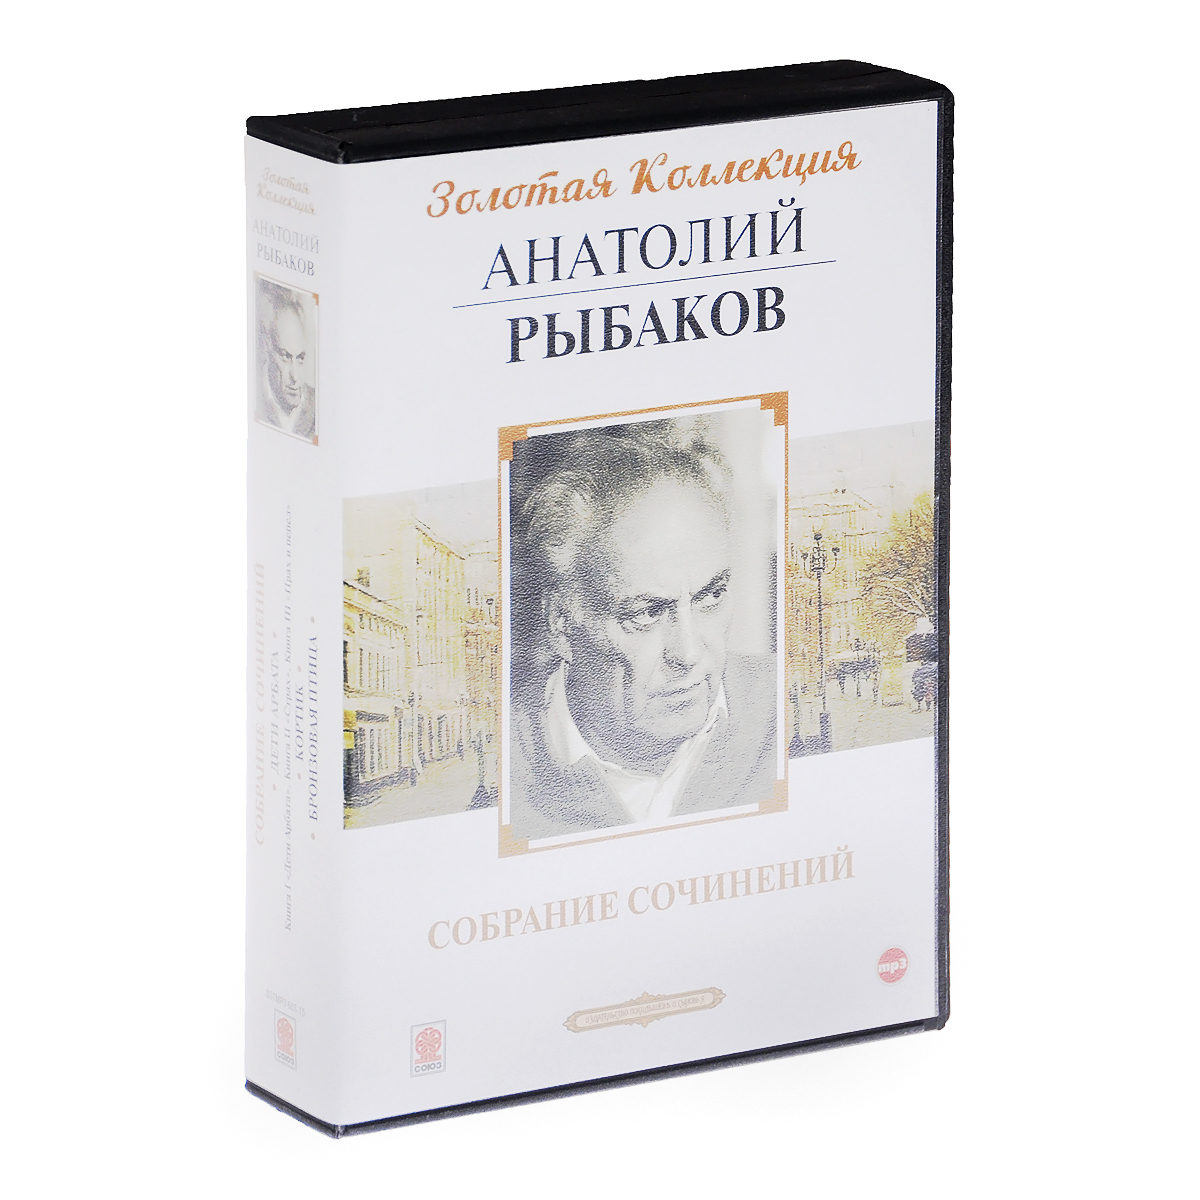 Анатолий Рыбаков. Собрание сочинений (аудиокнига МР 3 на 10 CD)